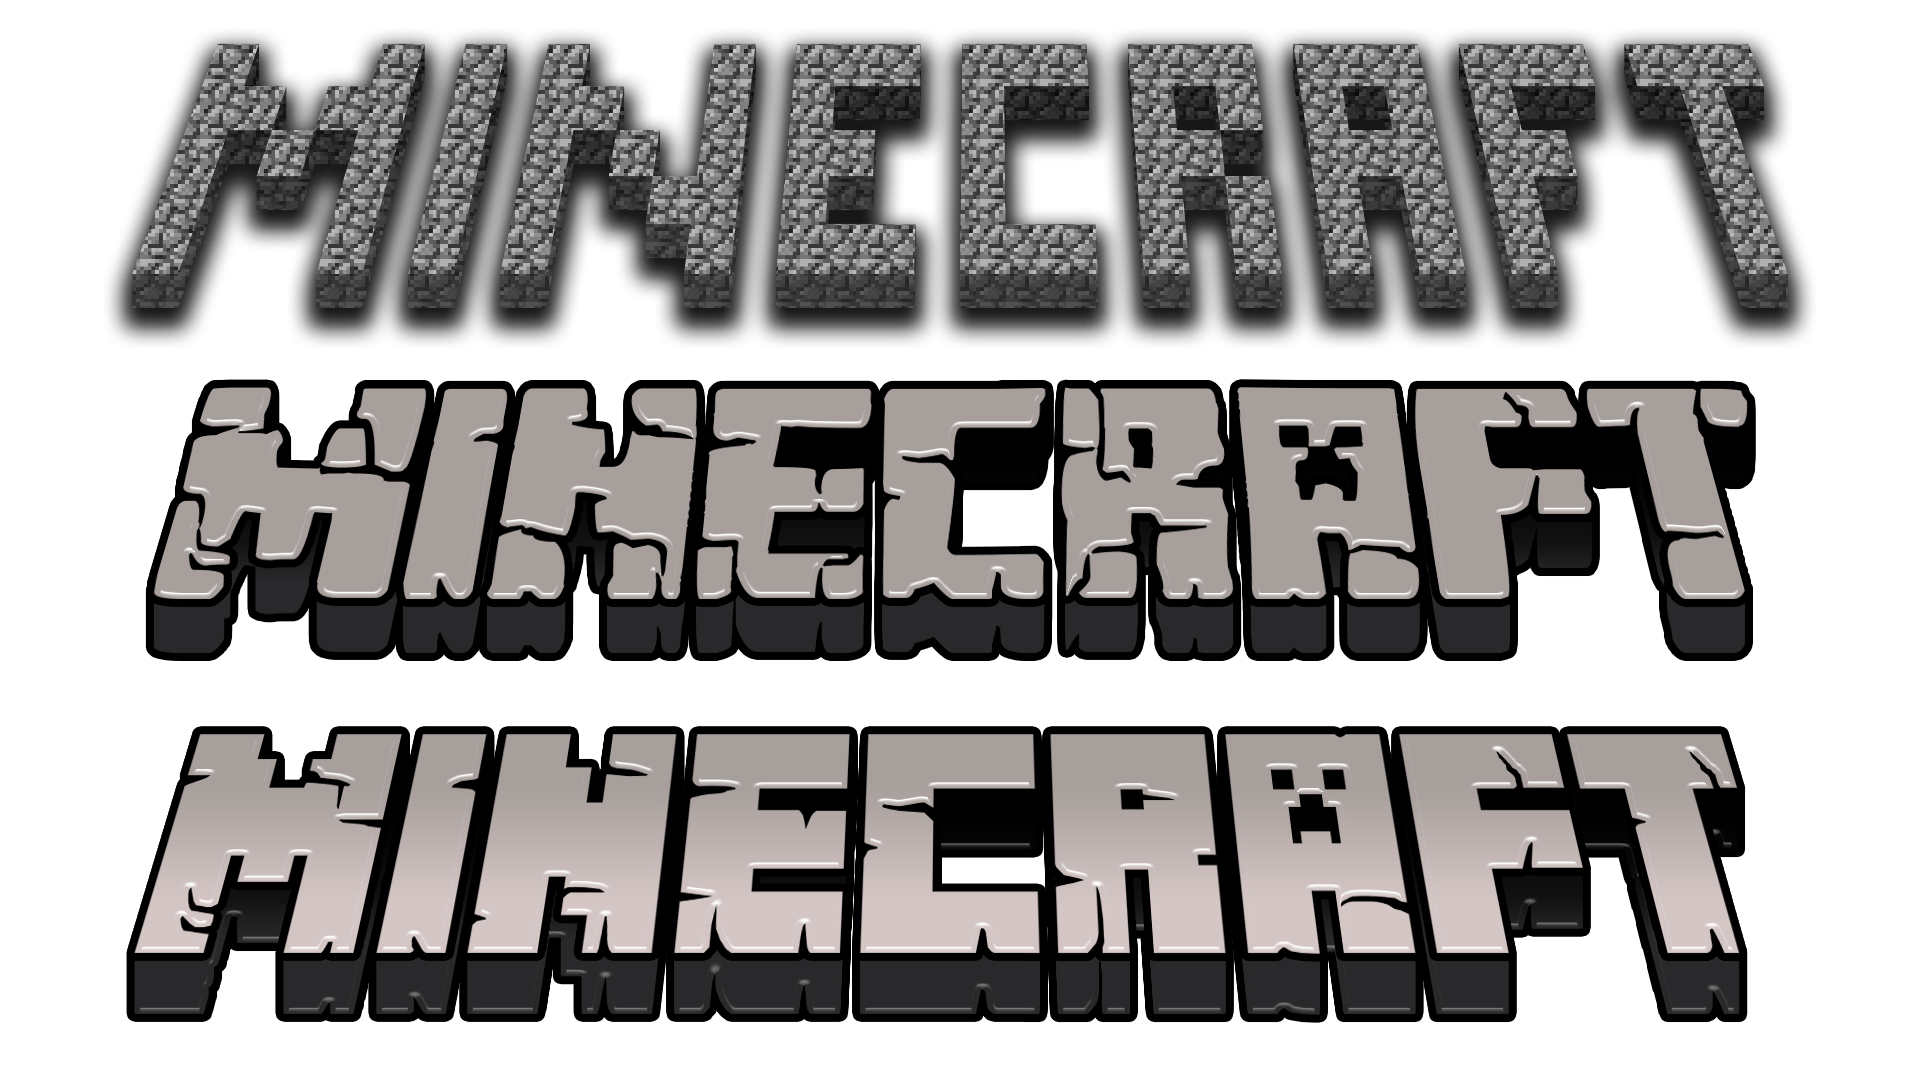 Надпись на весь экран майнкрафт. Майнкрафт. Minecraft логотип. Надпись МАЙНКРАФТА. Логотип игры майнкрафт.